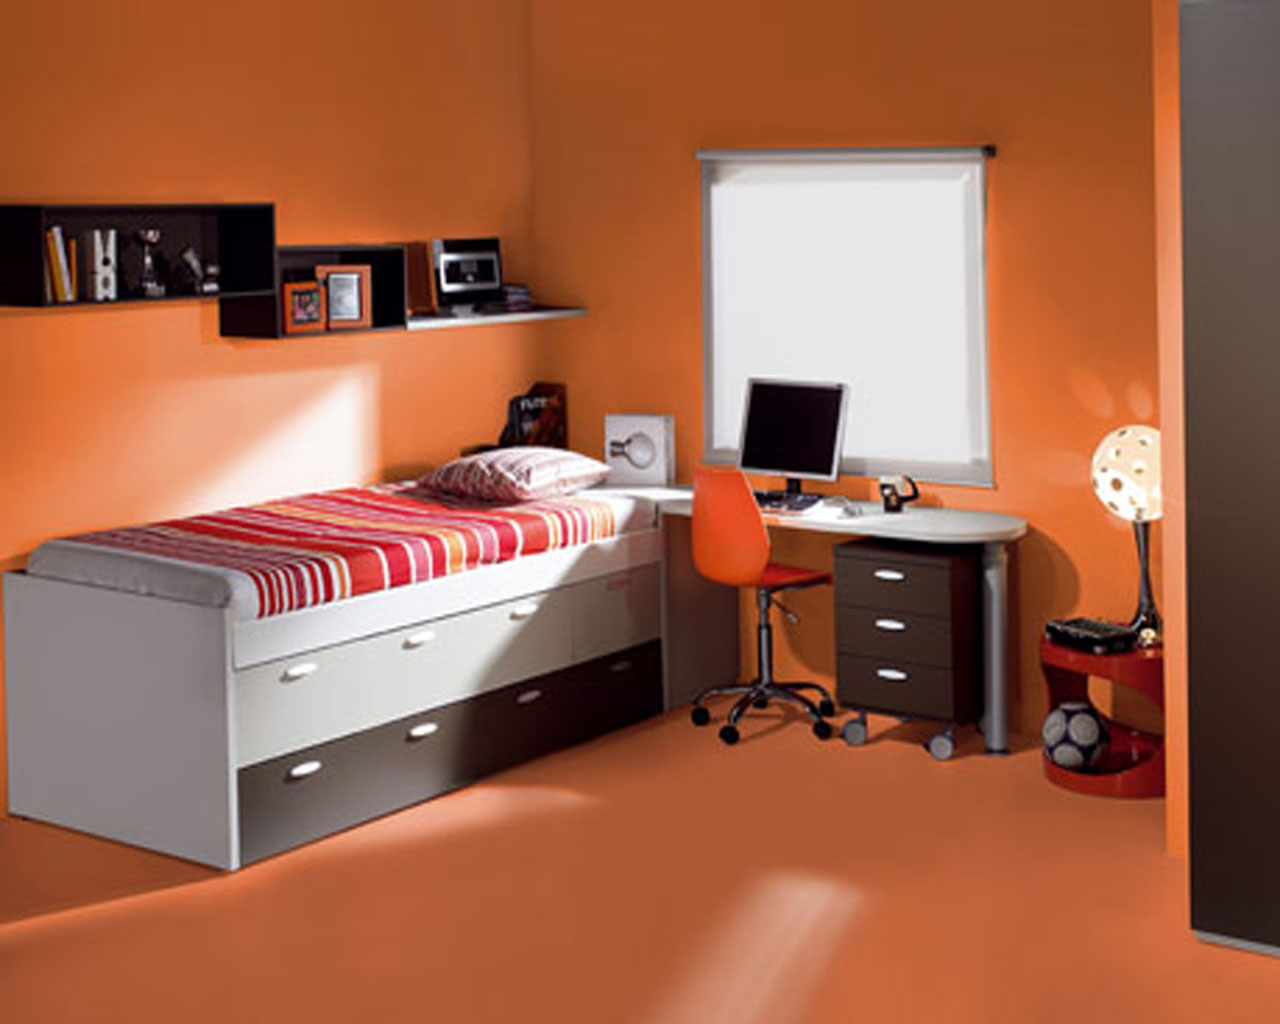 Children's Orange Bedroom Ideas - Terrys Fabrics's BlogTerrys Fabrics...